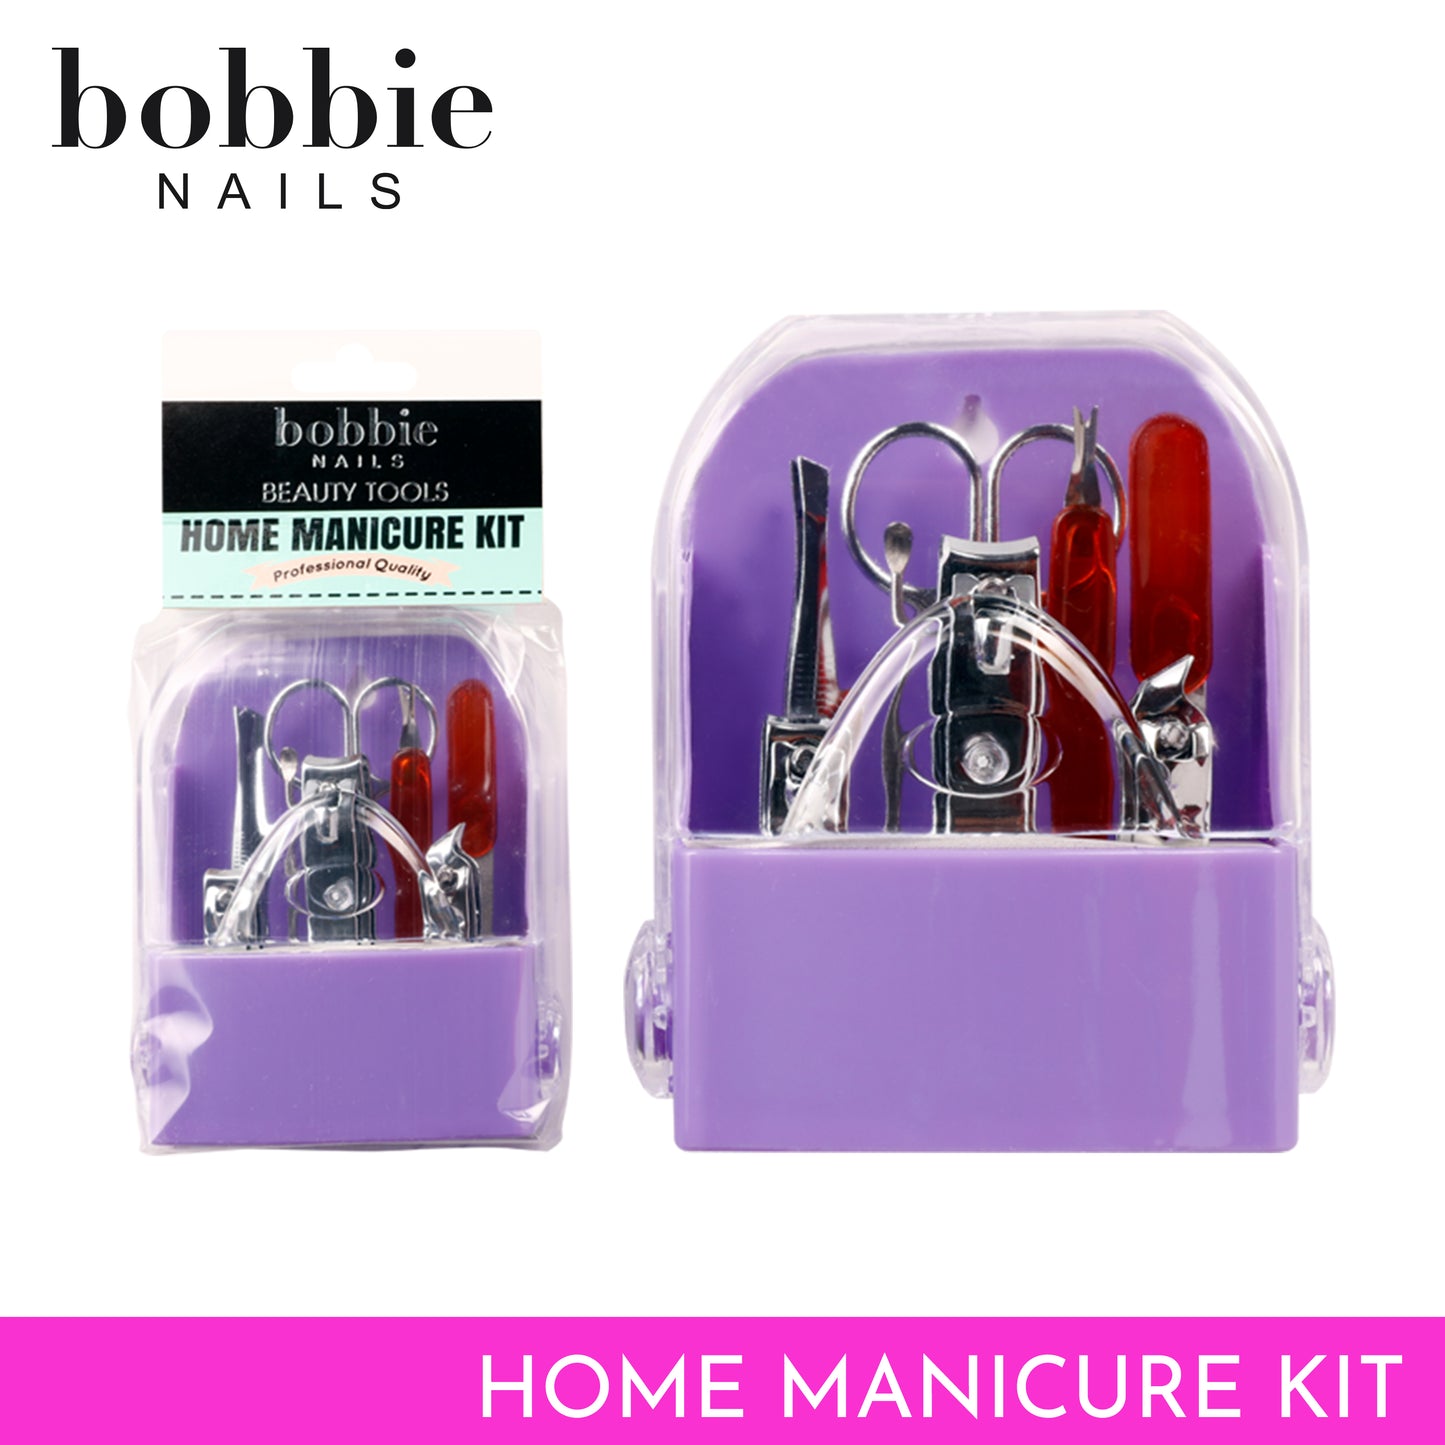 Bobbie Nails Home Manicure Kit